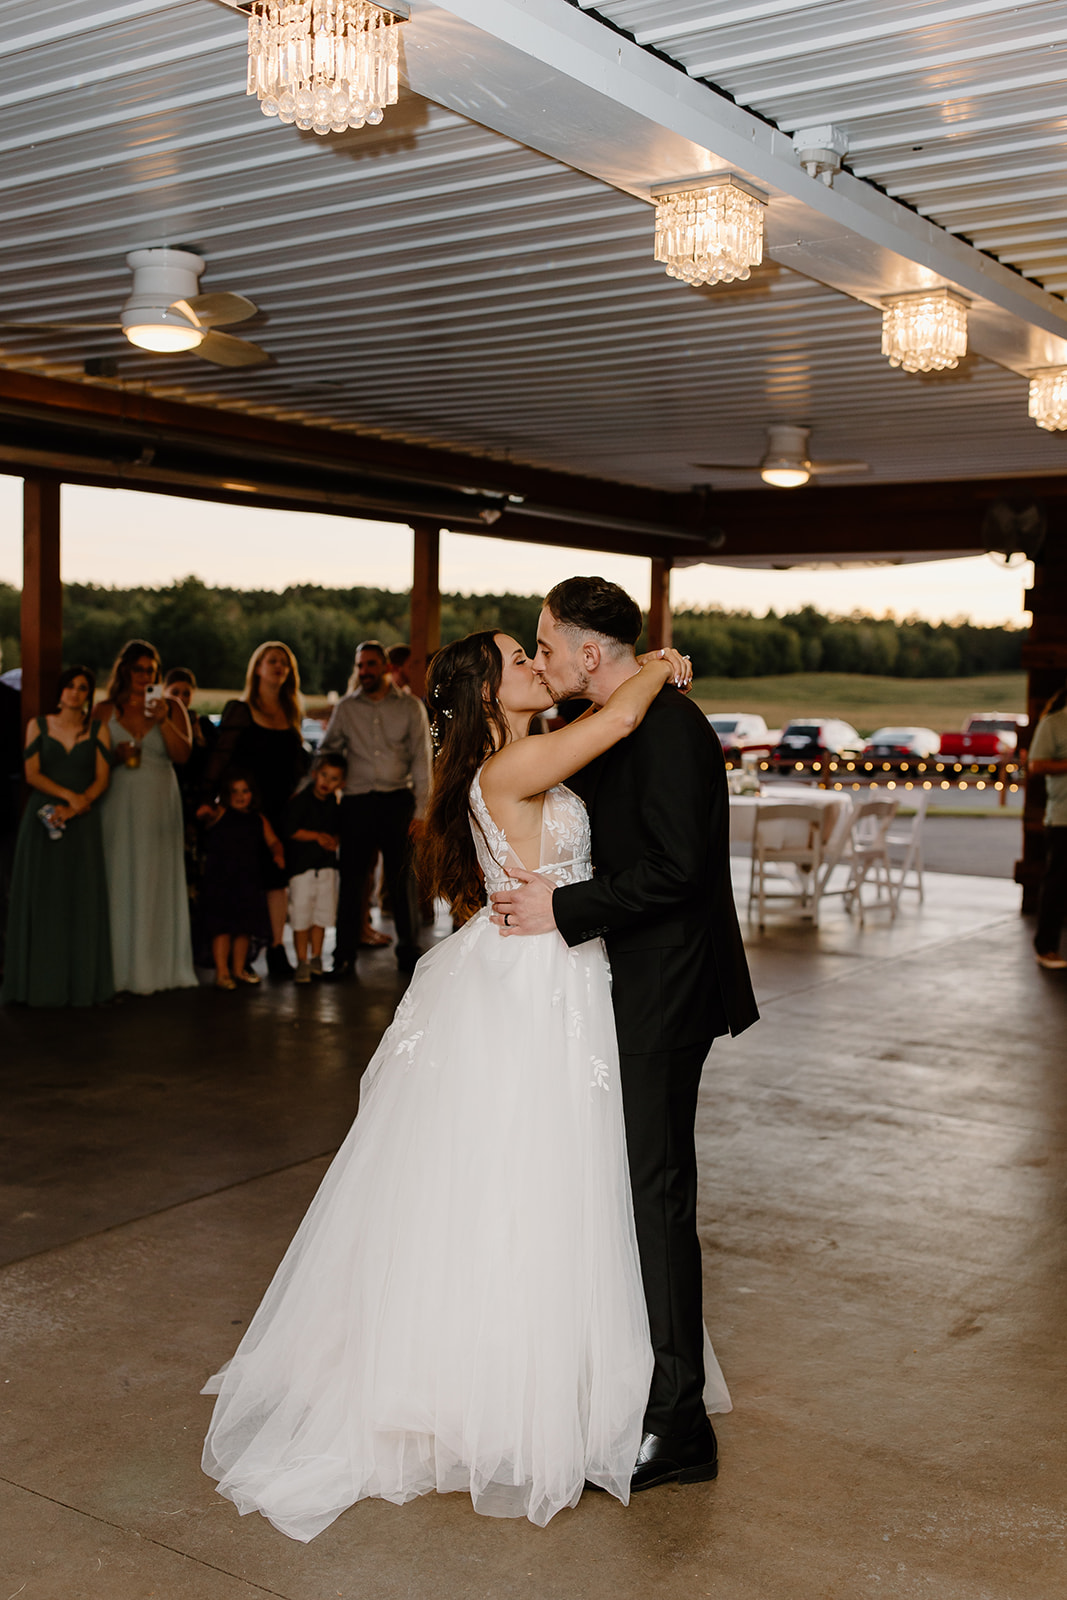 Bride and groom dance underneath lights